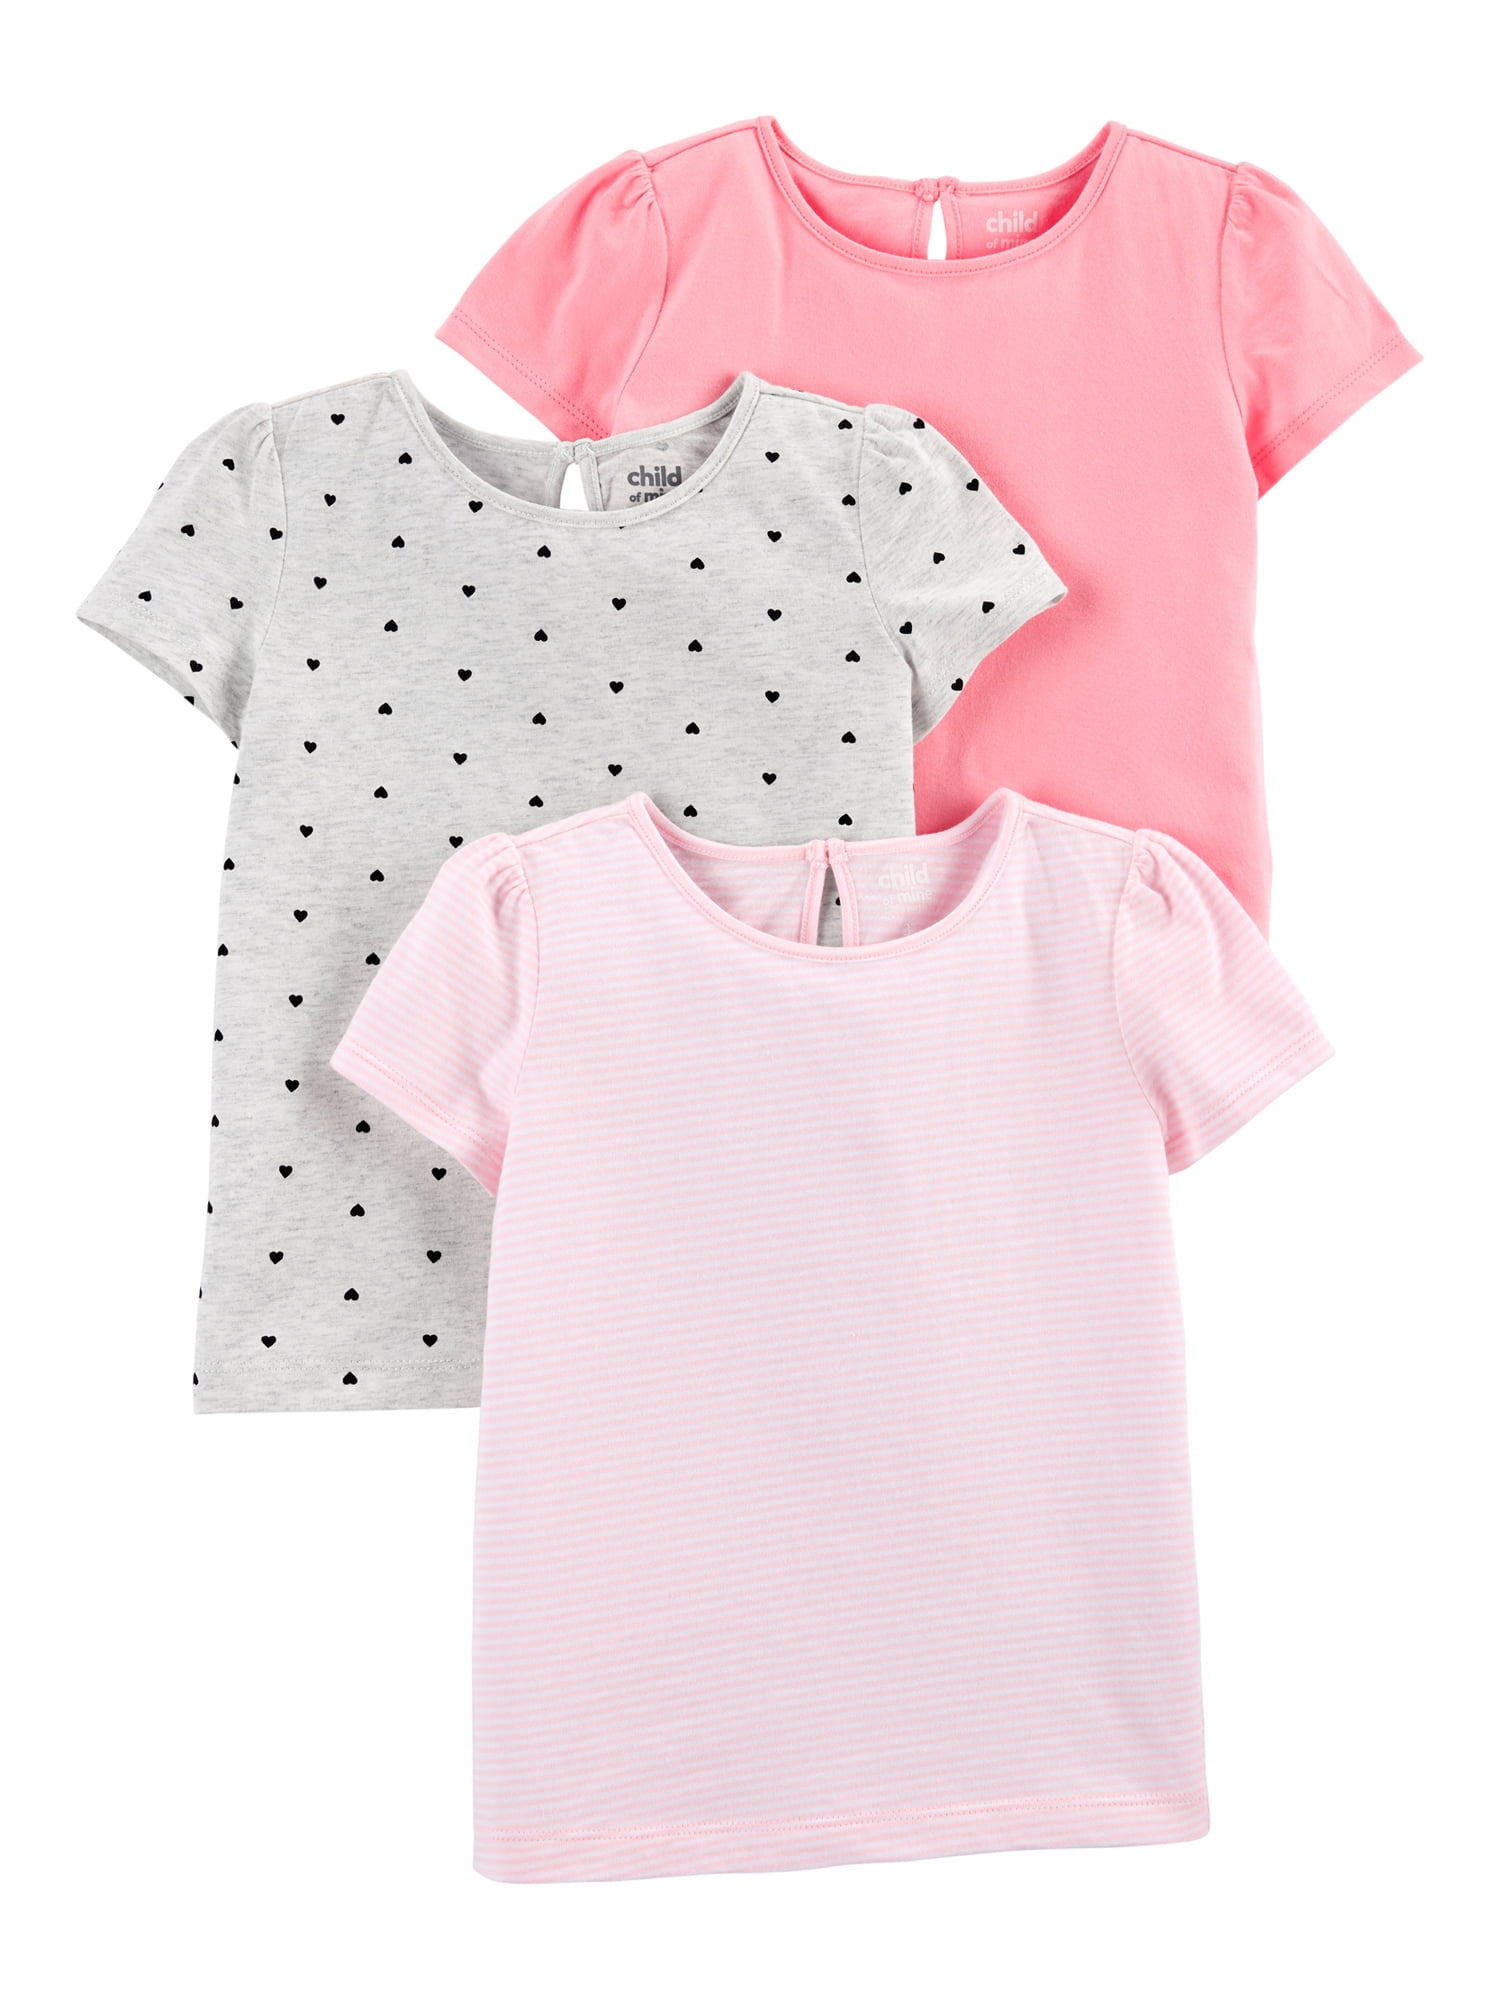 BabyGap Infant Toddler Girl Long Sleeve Cotton Shirt Top 12-18-24-2T-3T-4T-5T 